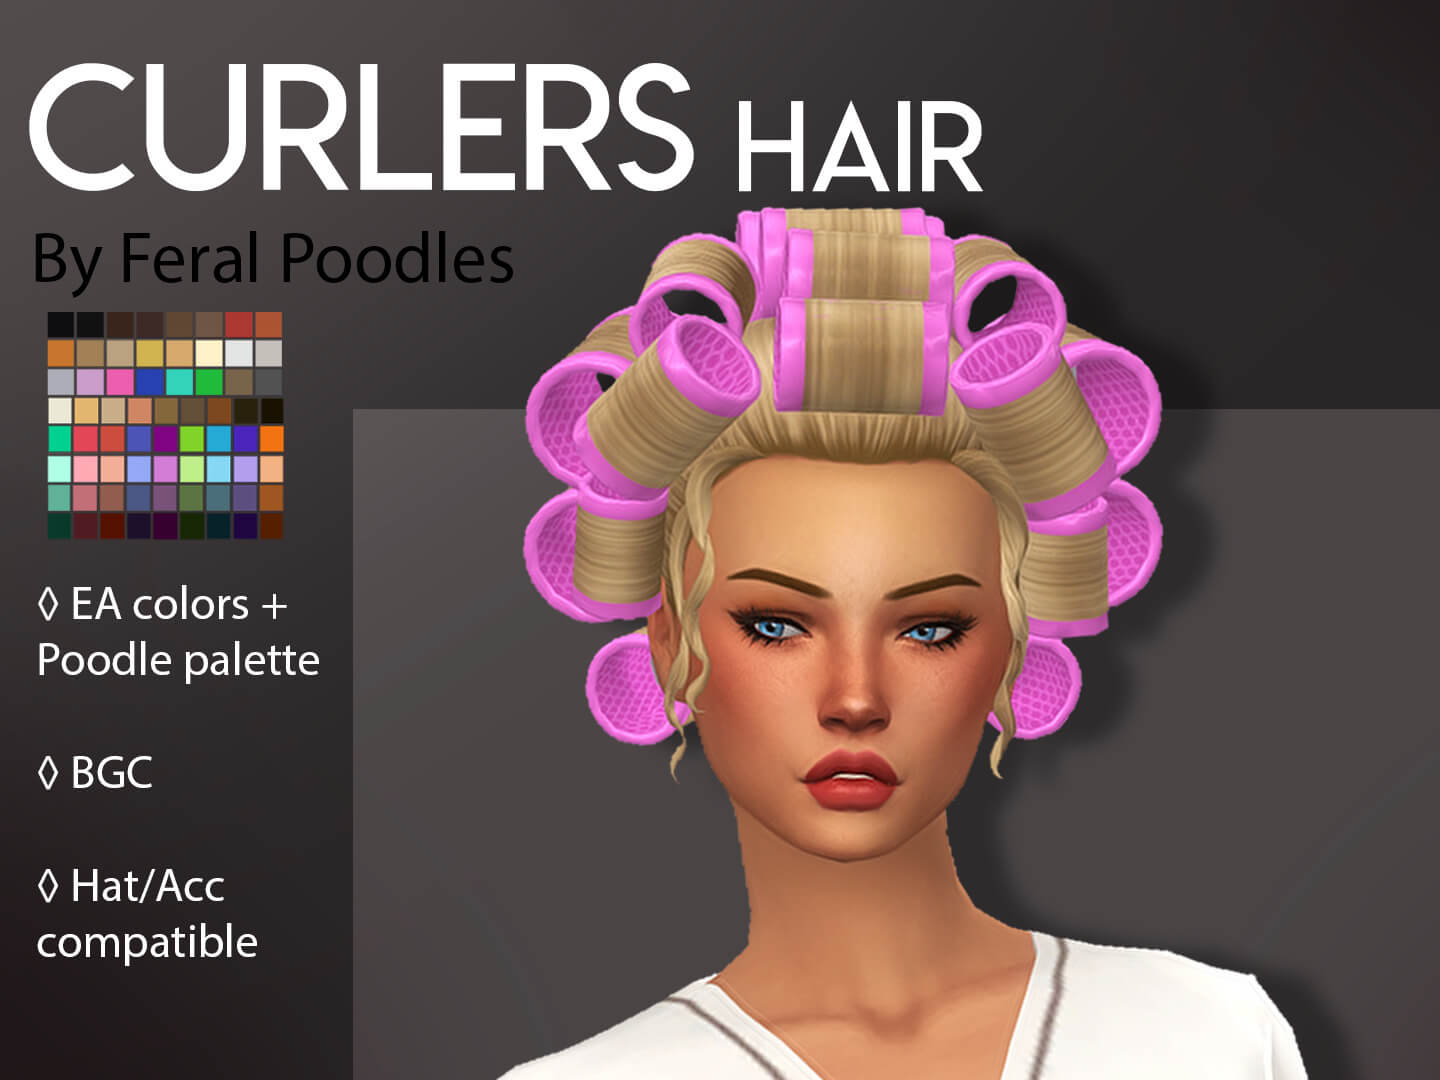 The Sims 4 Curlers Hair Ts4 Maxis Match Cc Micatgame.com  